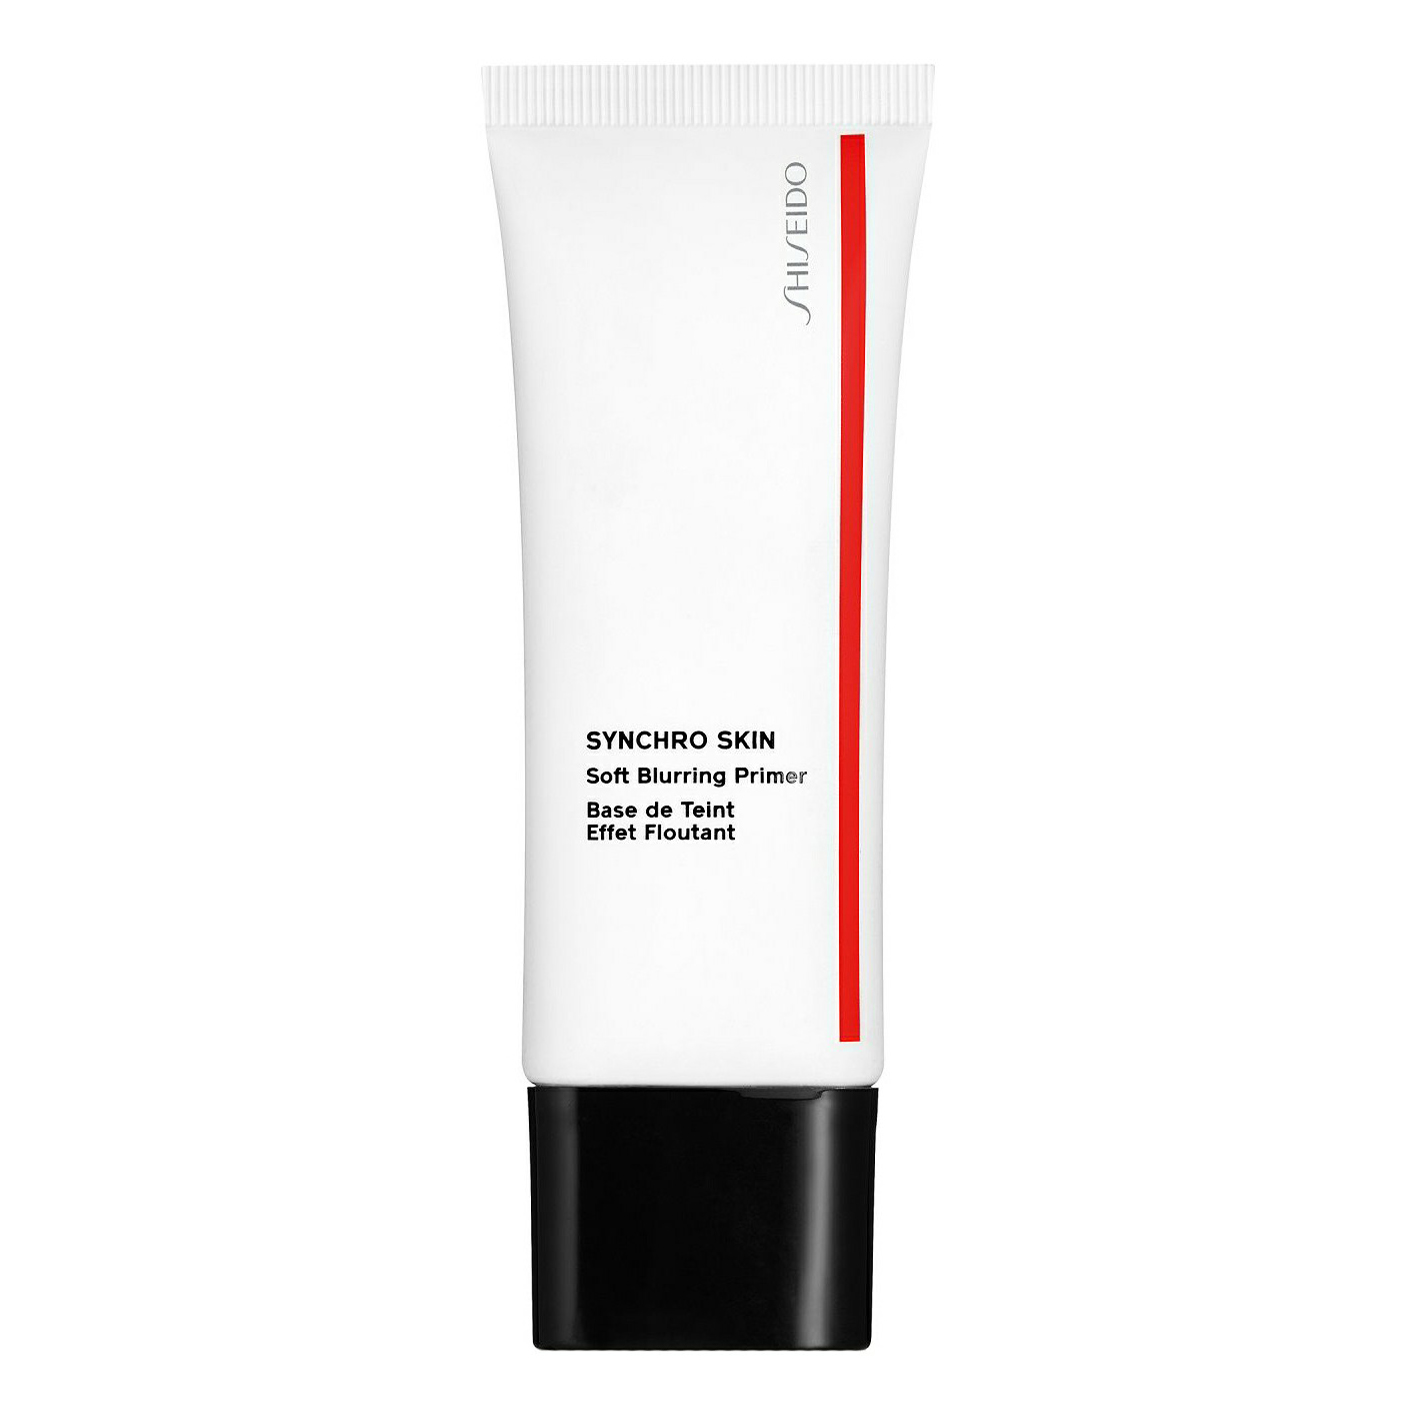 Праймер для лица Shiseido Synchro Skin Soft Blurring Primer выравнивающий, 30 мл revolution pro праймер protect soft focus primer spf 50